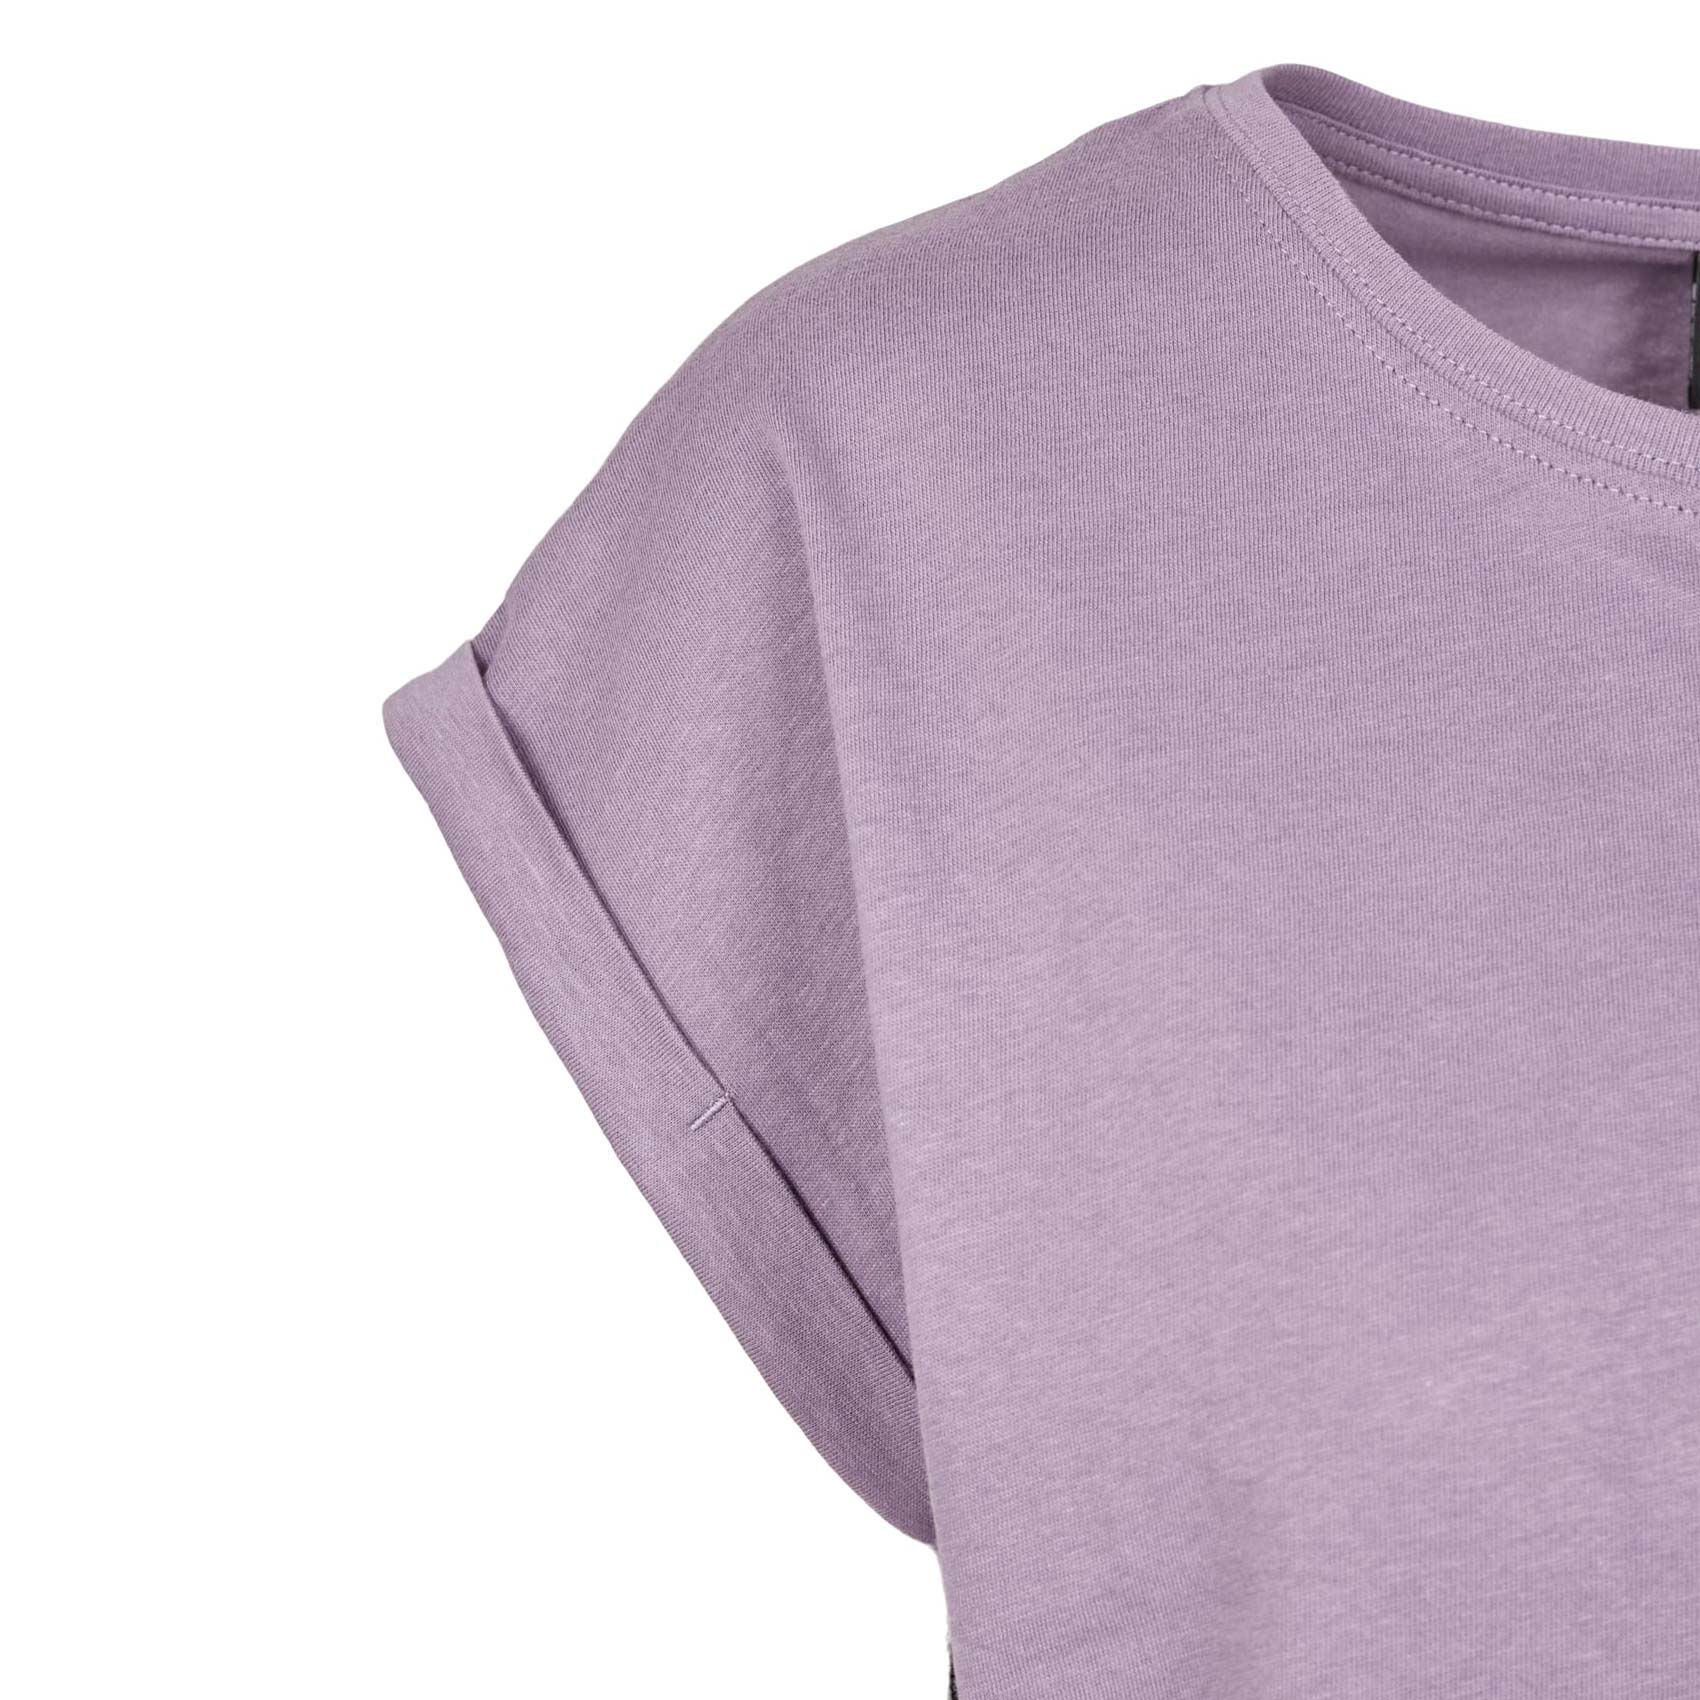 Urban Classics Damen T-Shirt Ladies Extended Shoulder Tee (dusty purple)